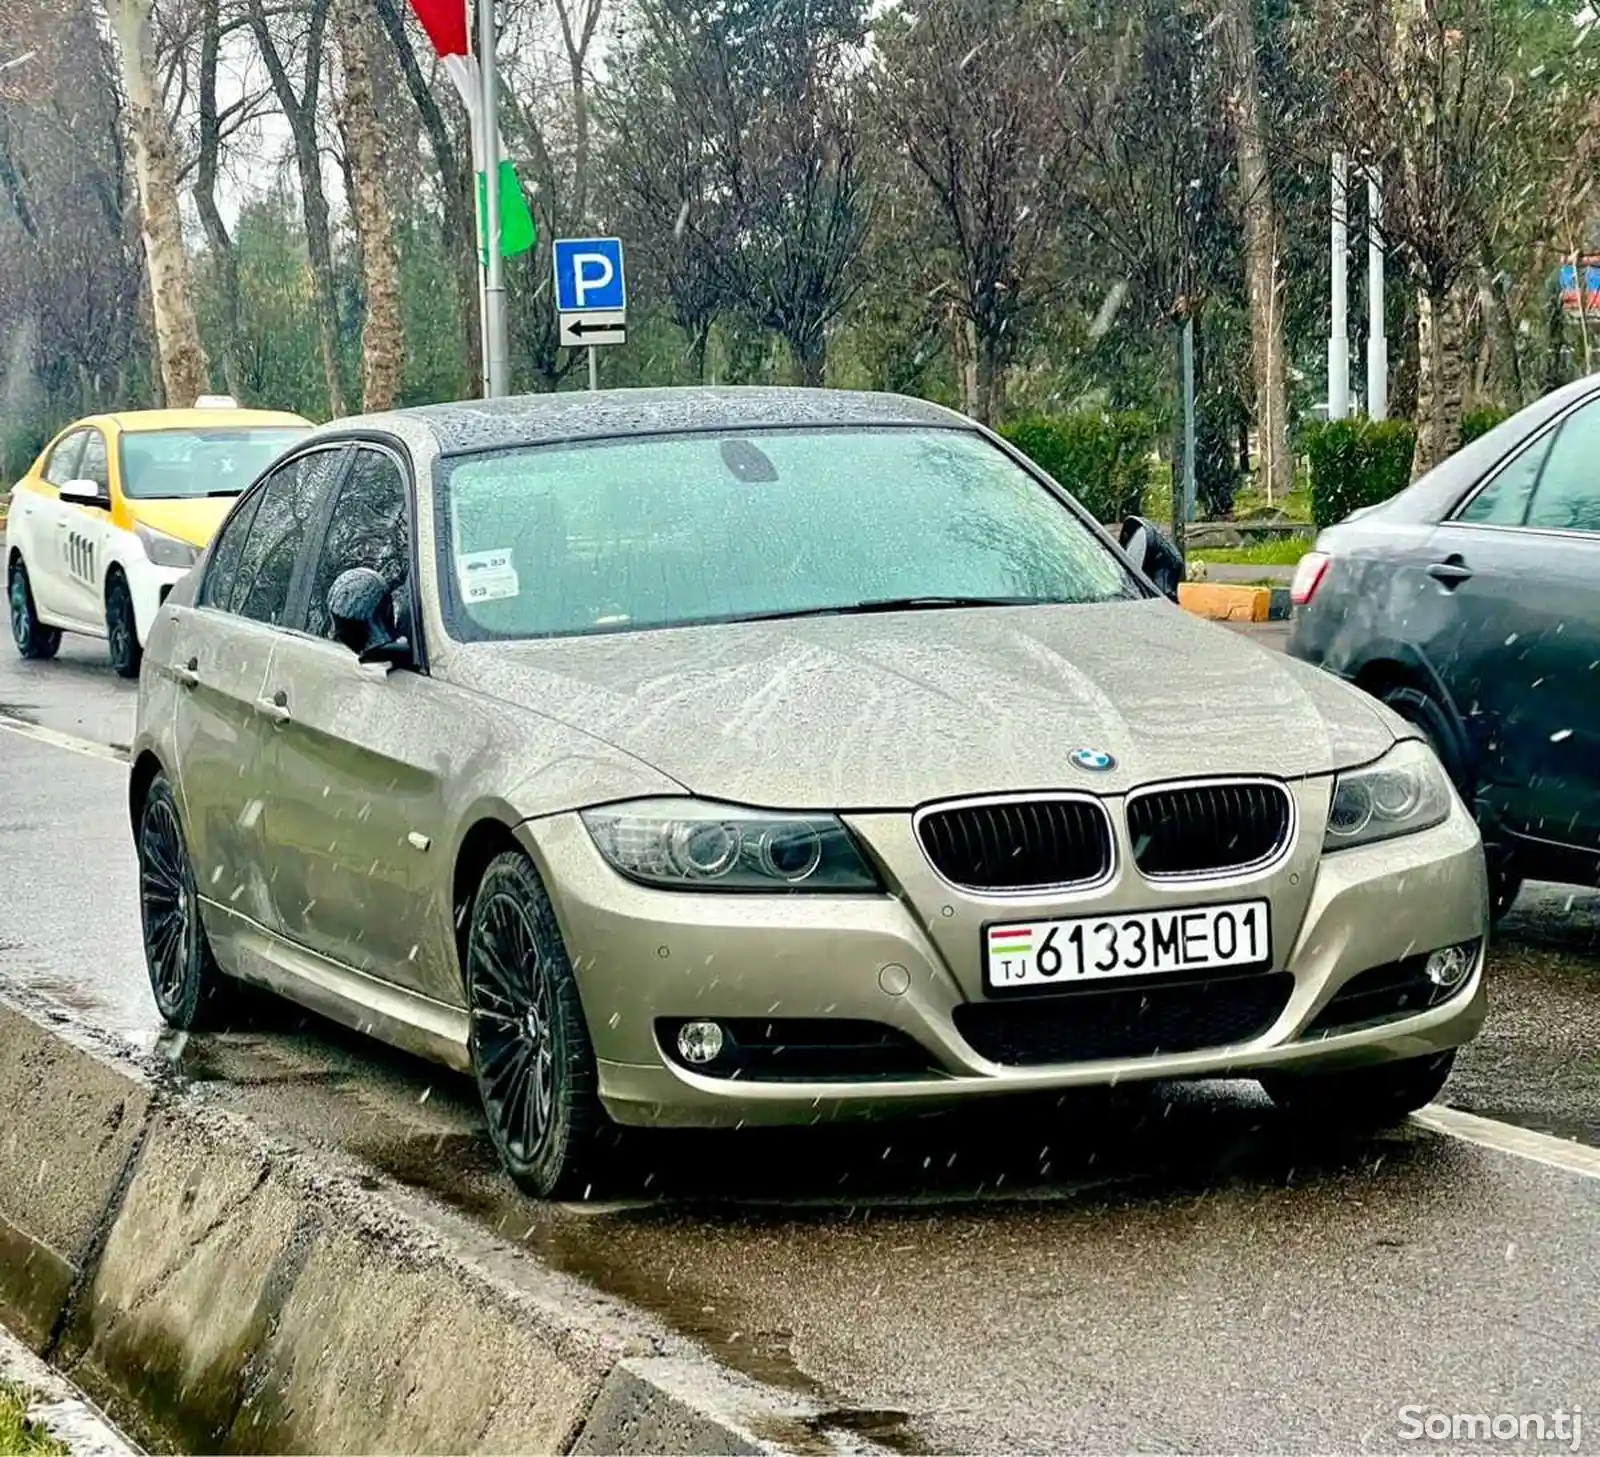 BMW 3 series, 2010-14